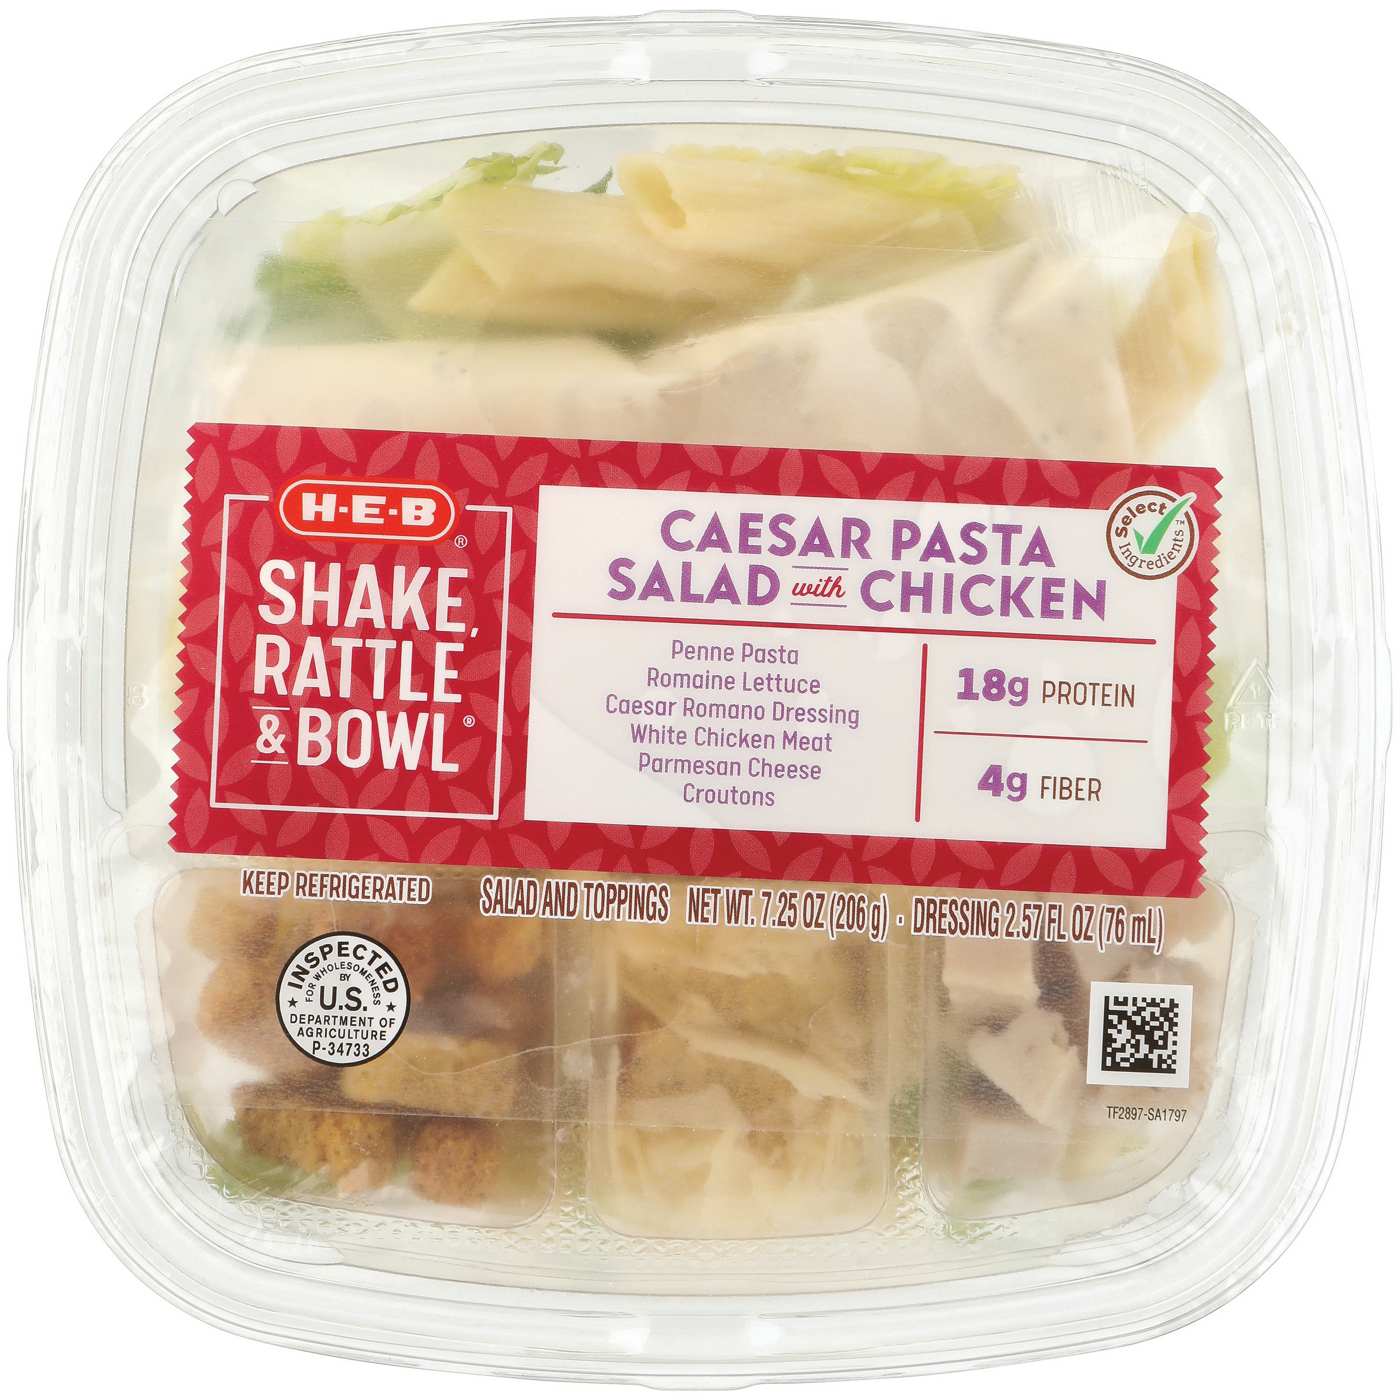 H-E-B Shake Rattle & Bowl - Chicken Caesar Pasta Salad; image 1 of 2